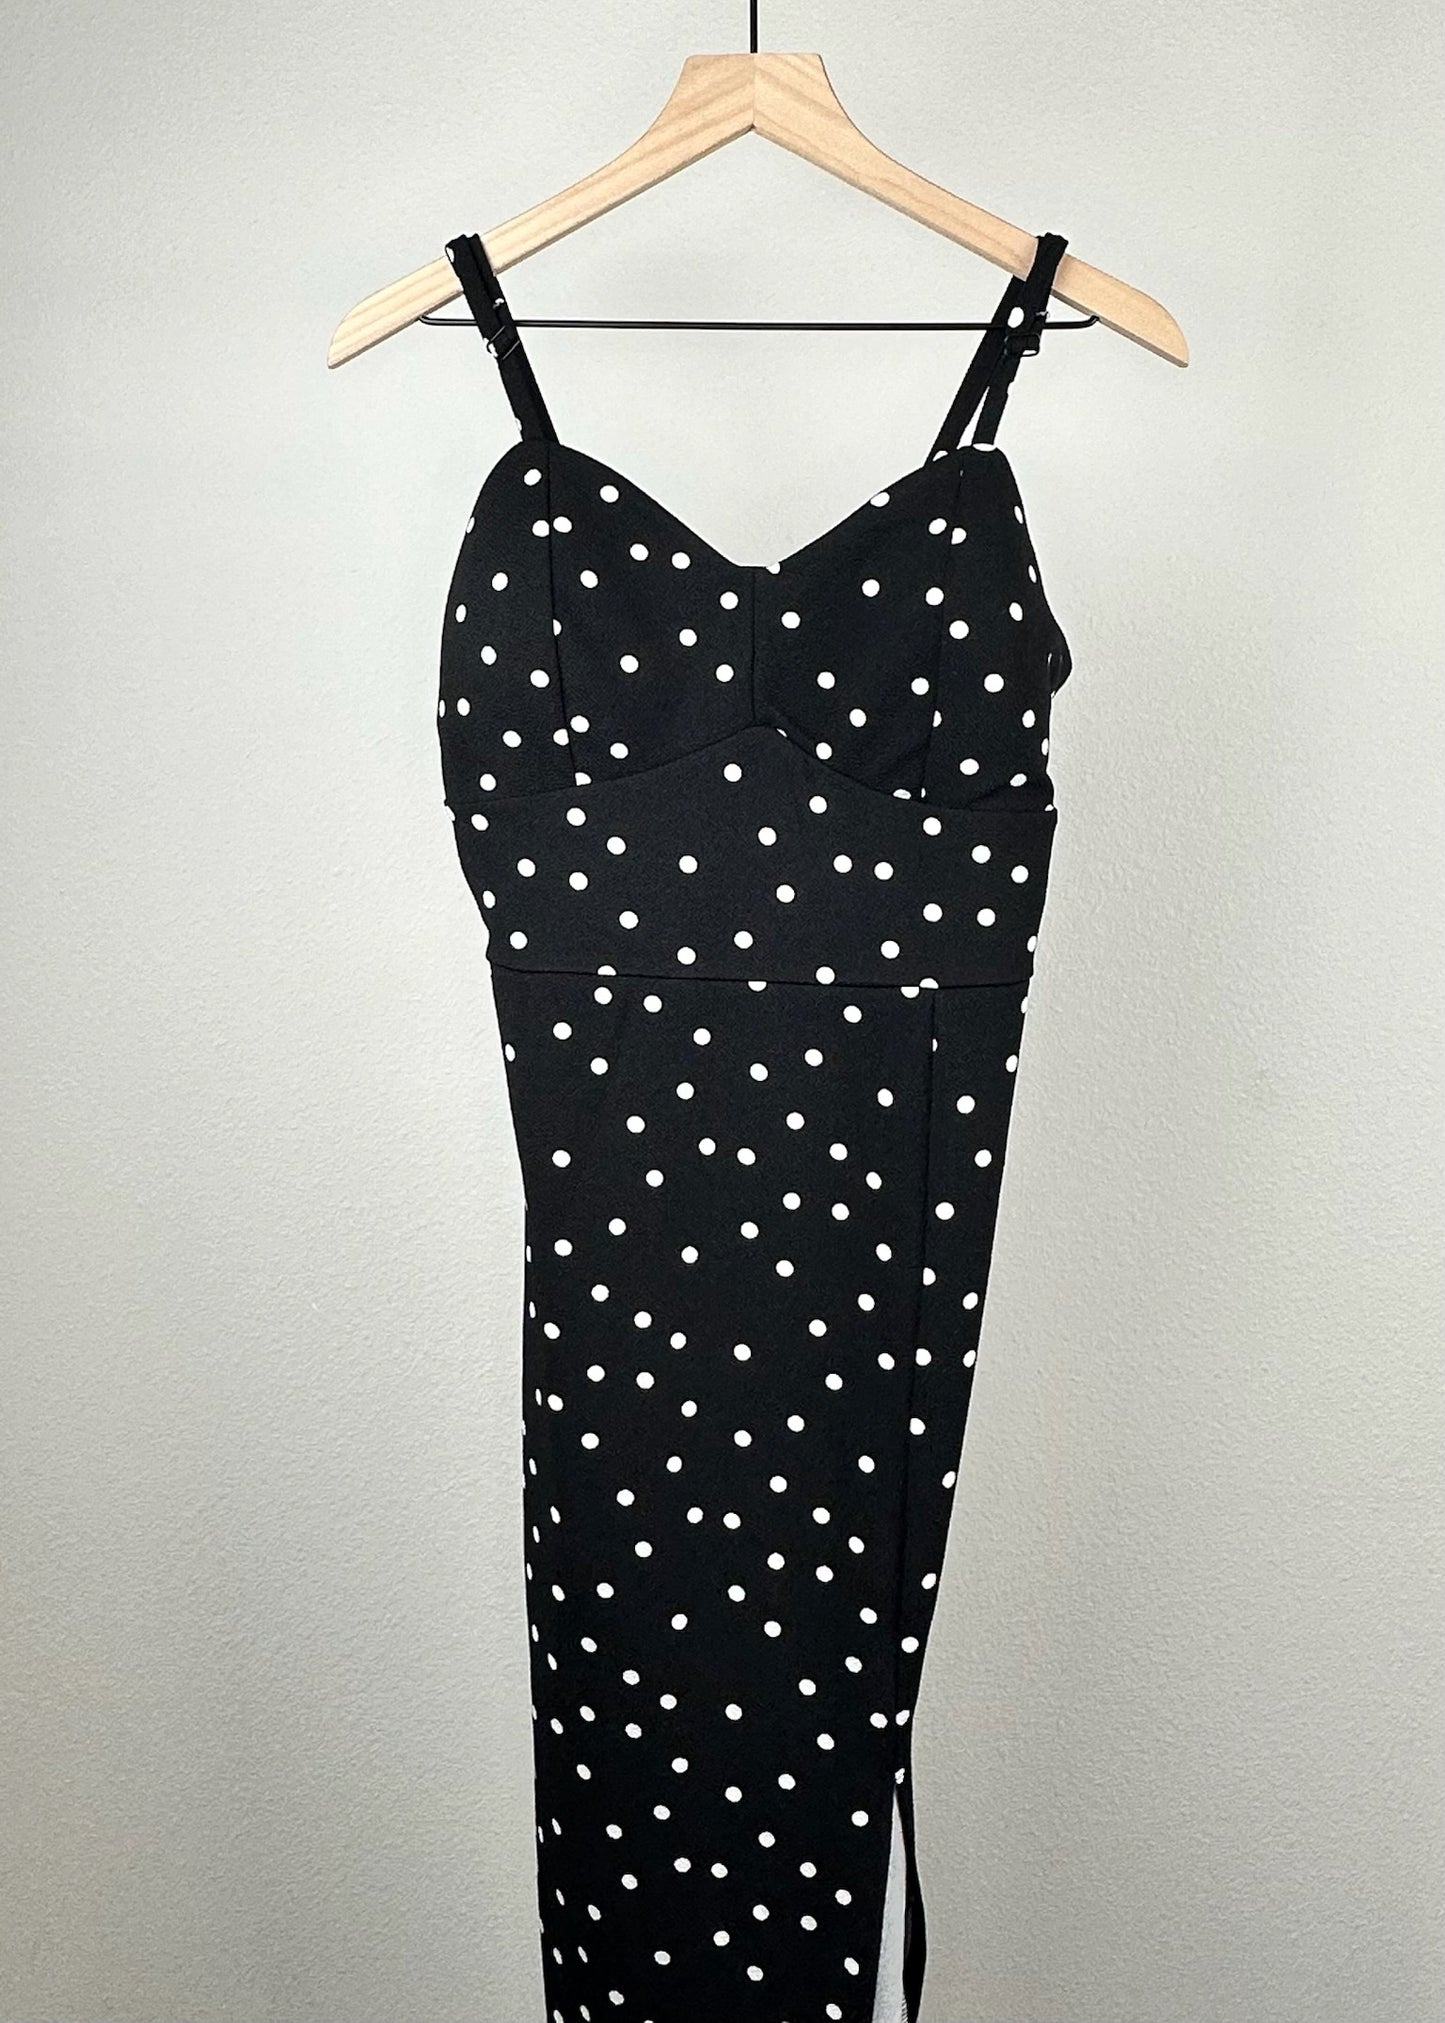 Black and White Polka Dot Dress by Fashion Nova